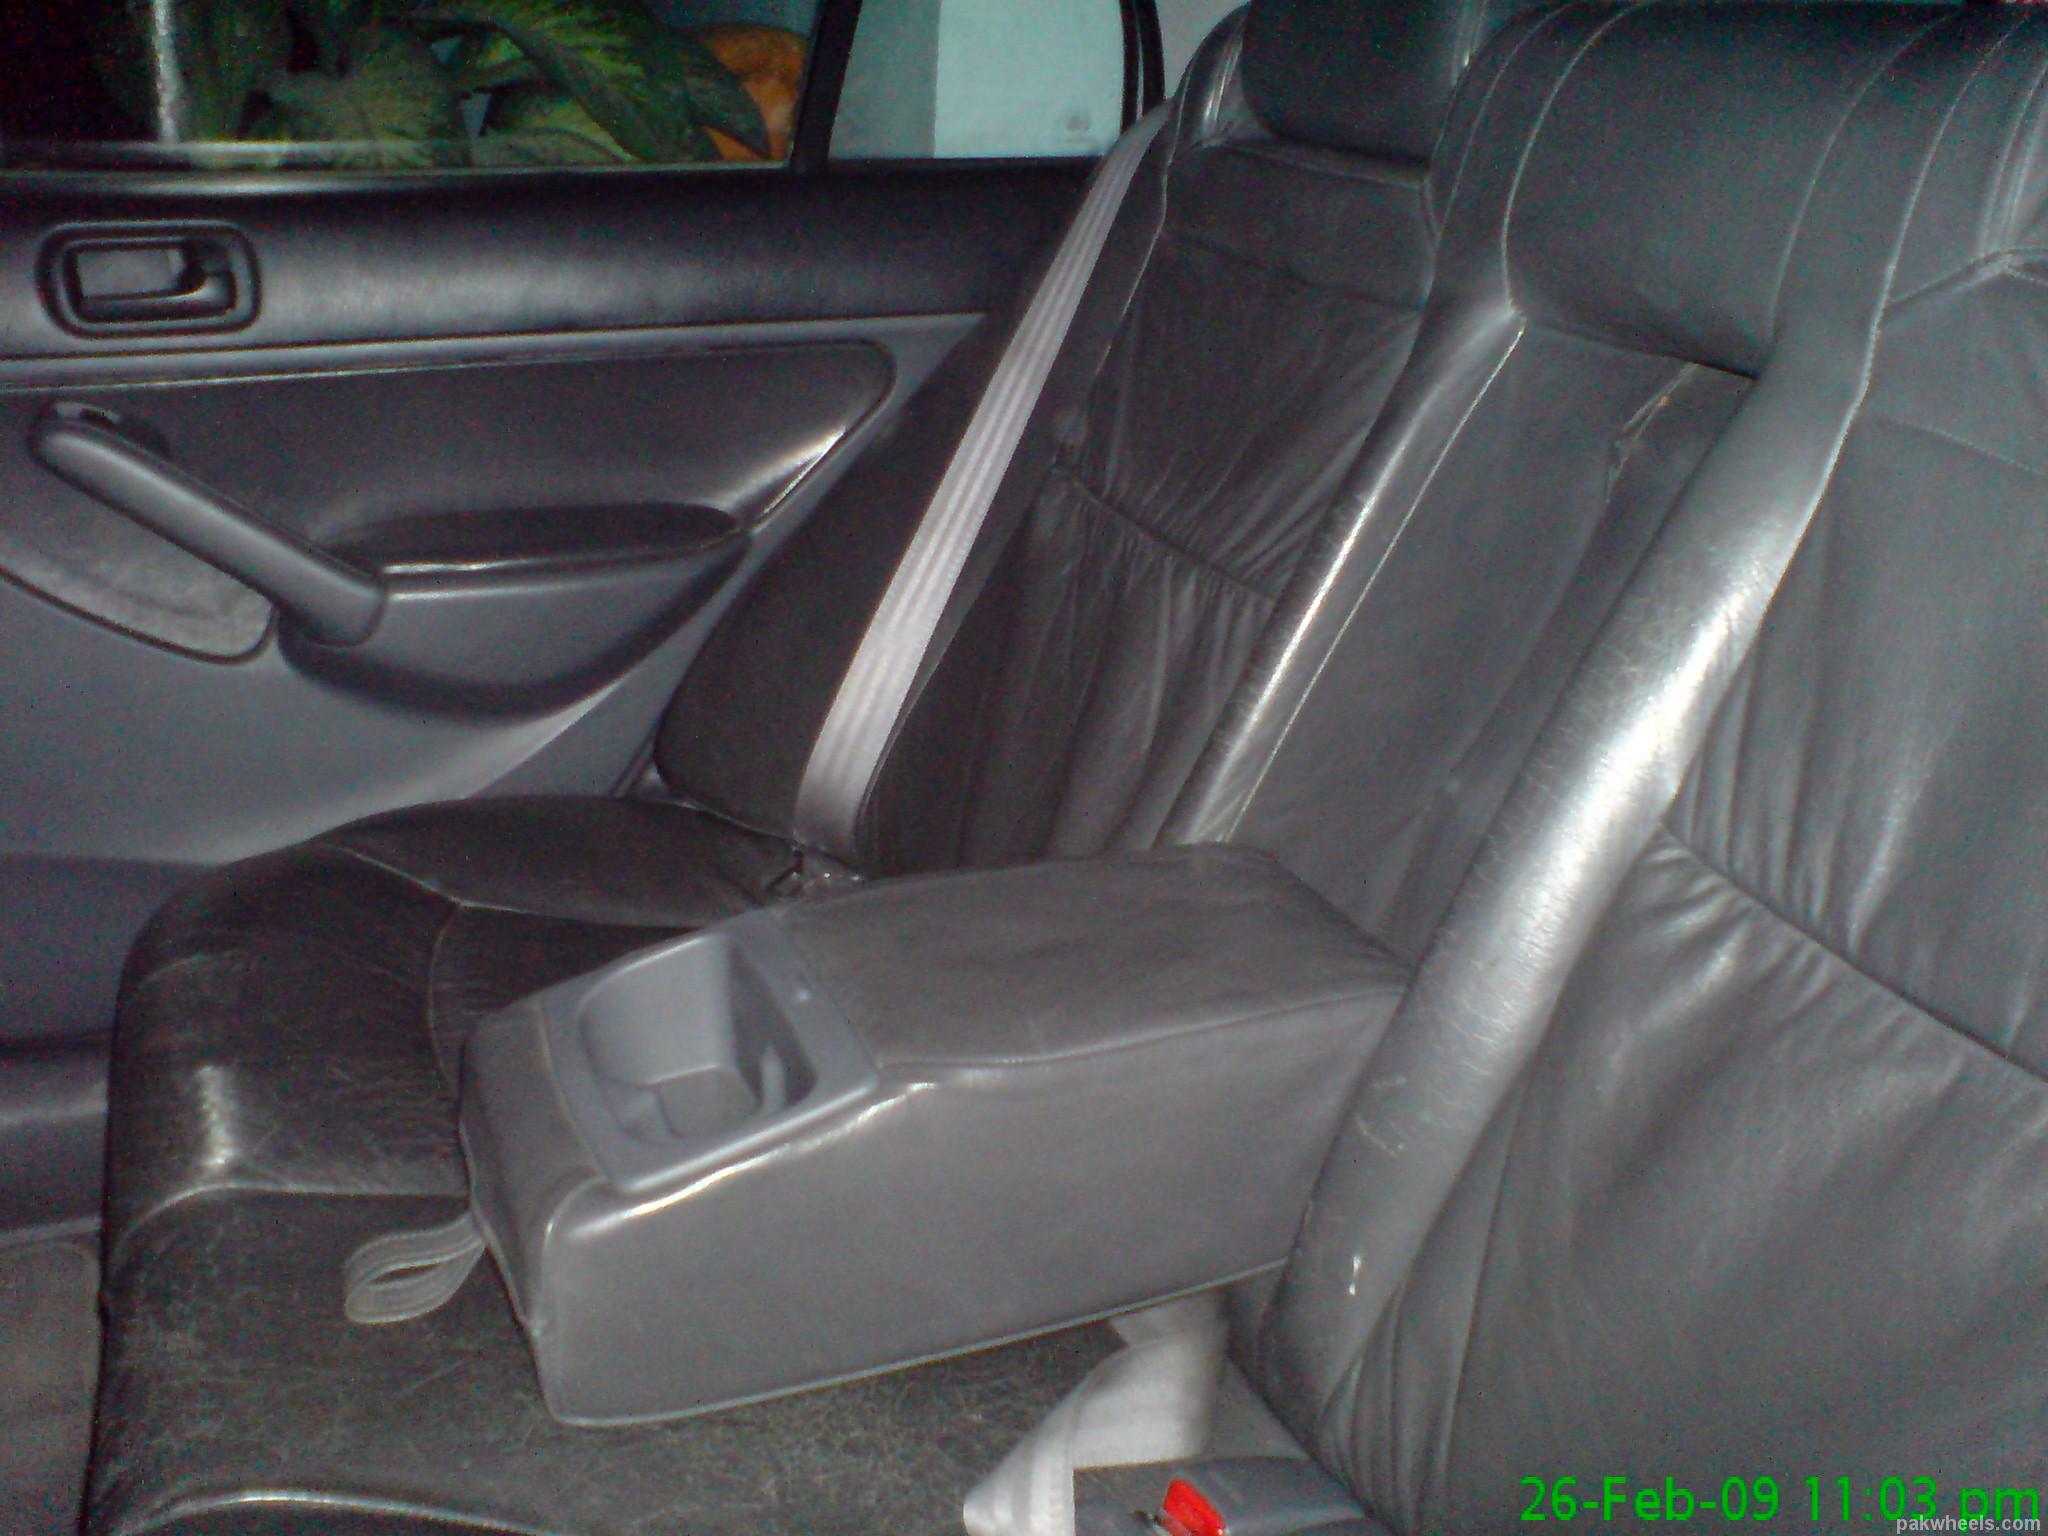 Honda Civic - 2002 VTi Oreal Prosmatic Image-1